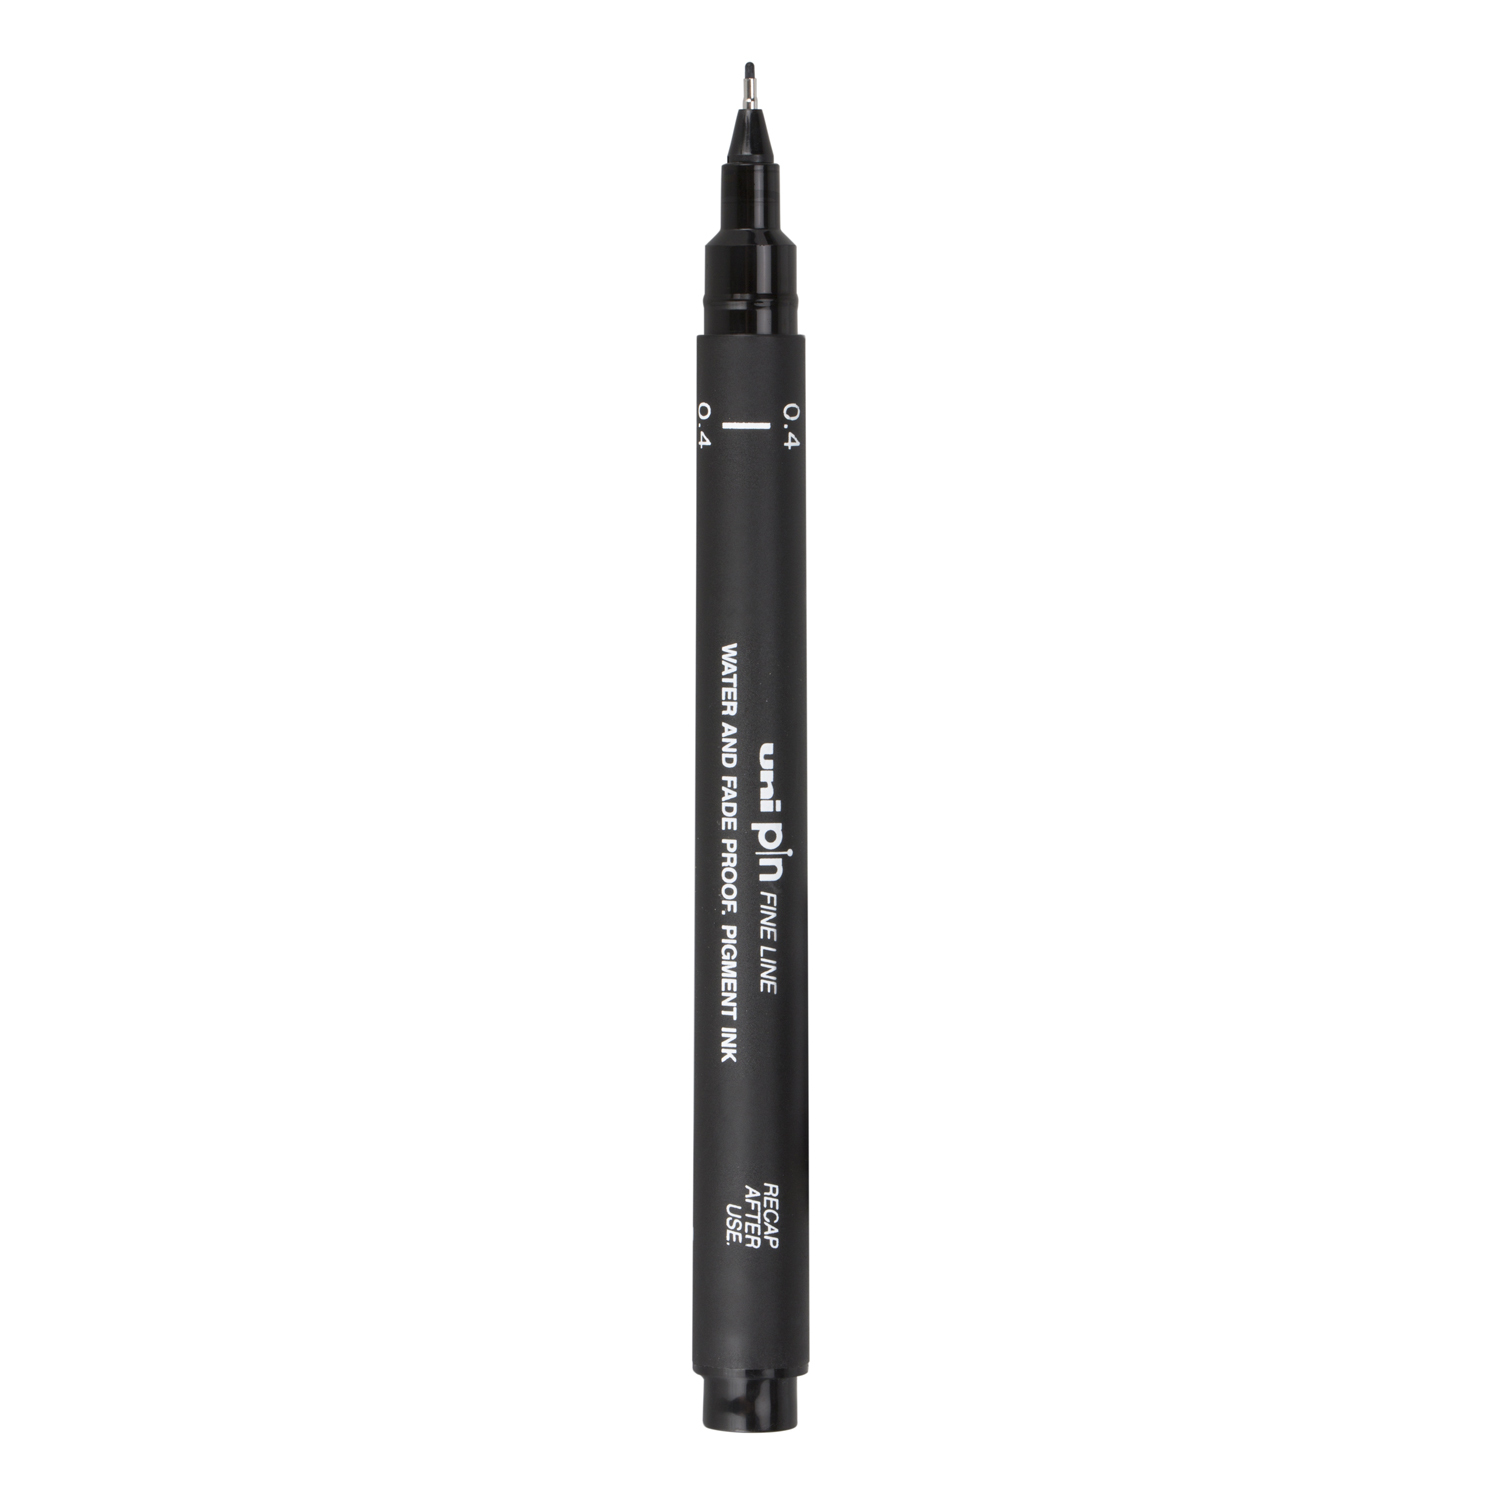 Uniball Pin Black Fine Liner Drawing Pen 0.4mm Image 2